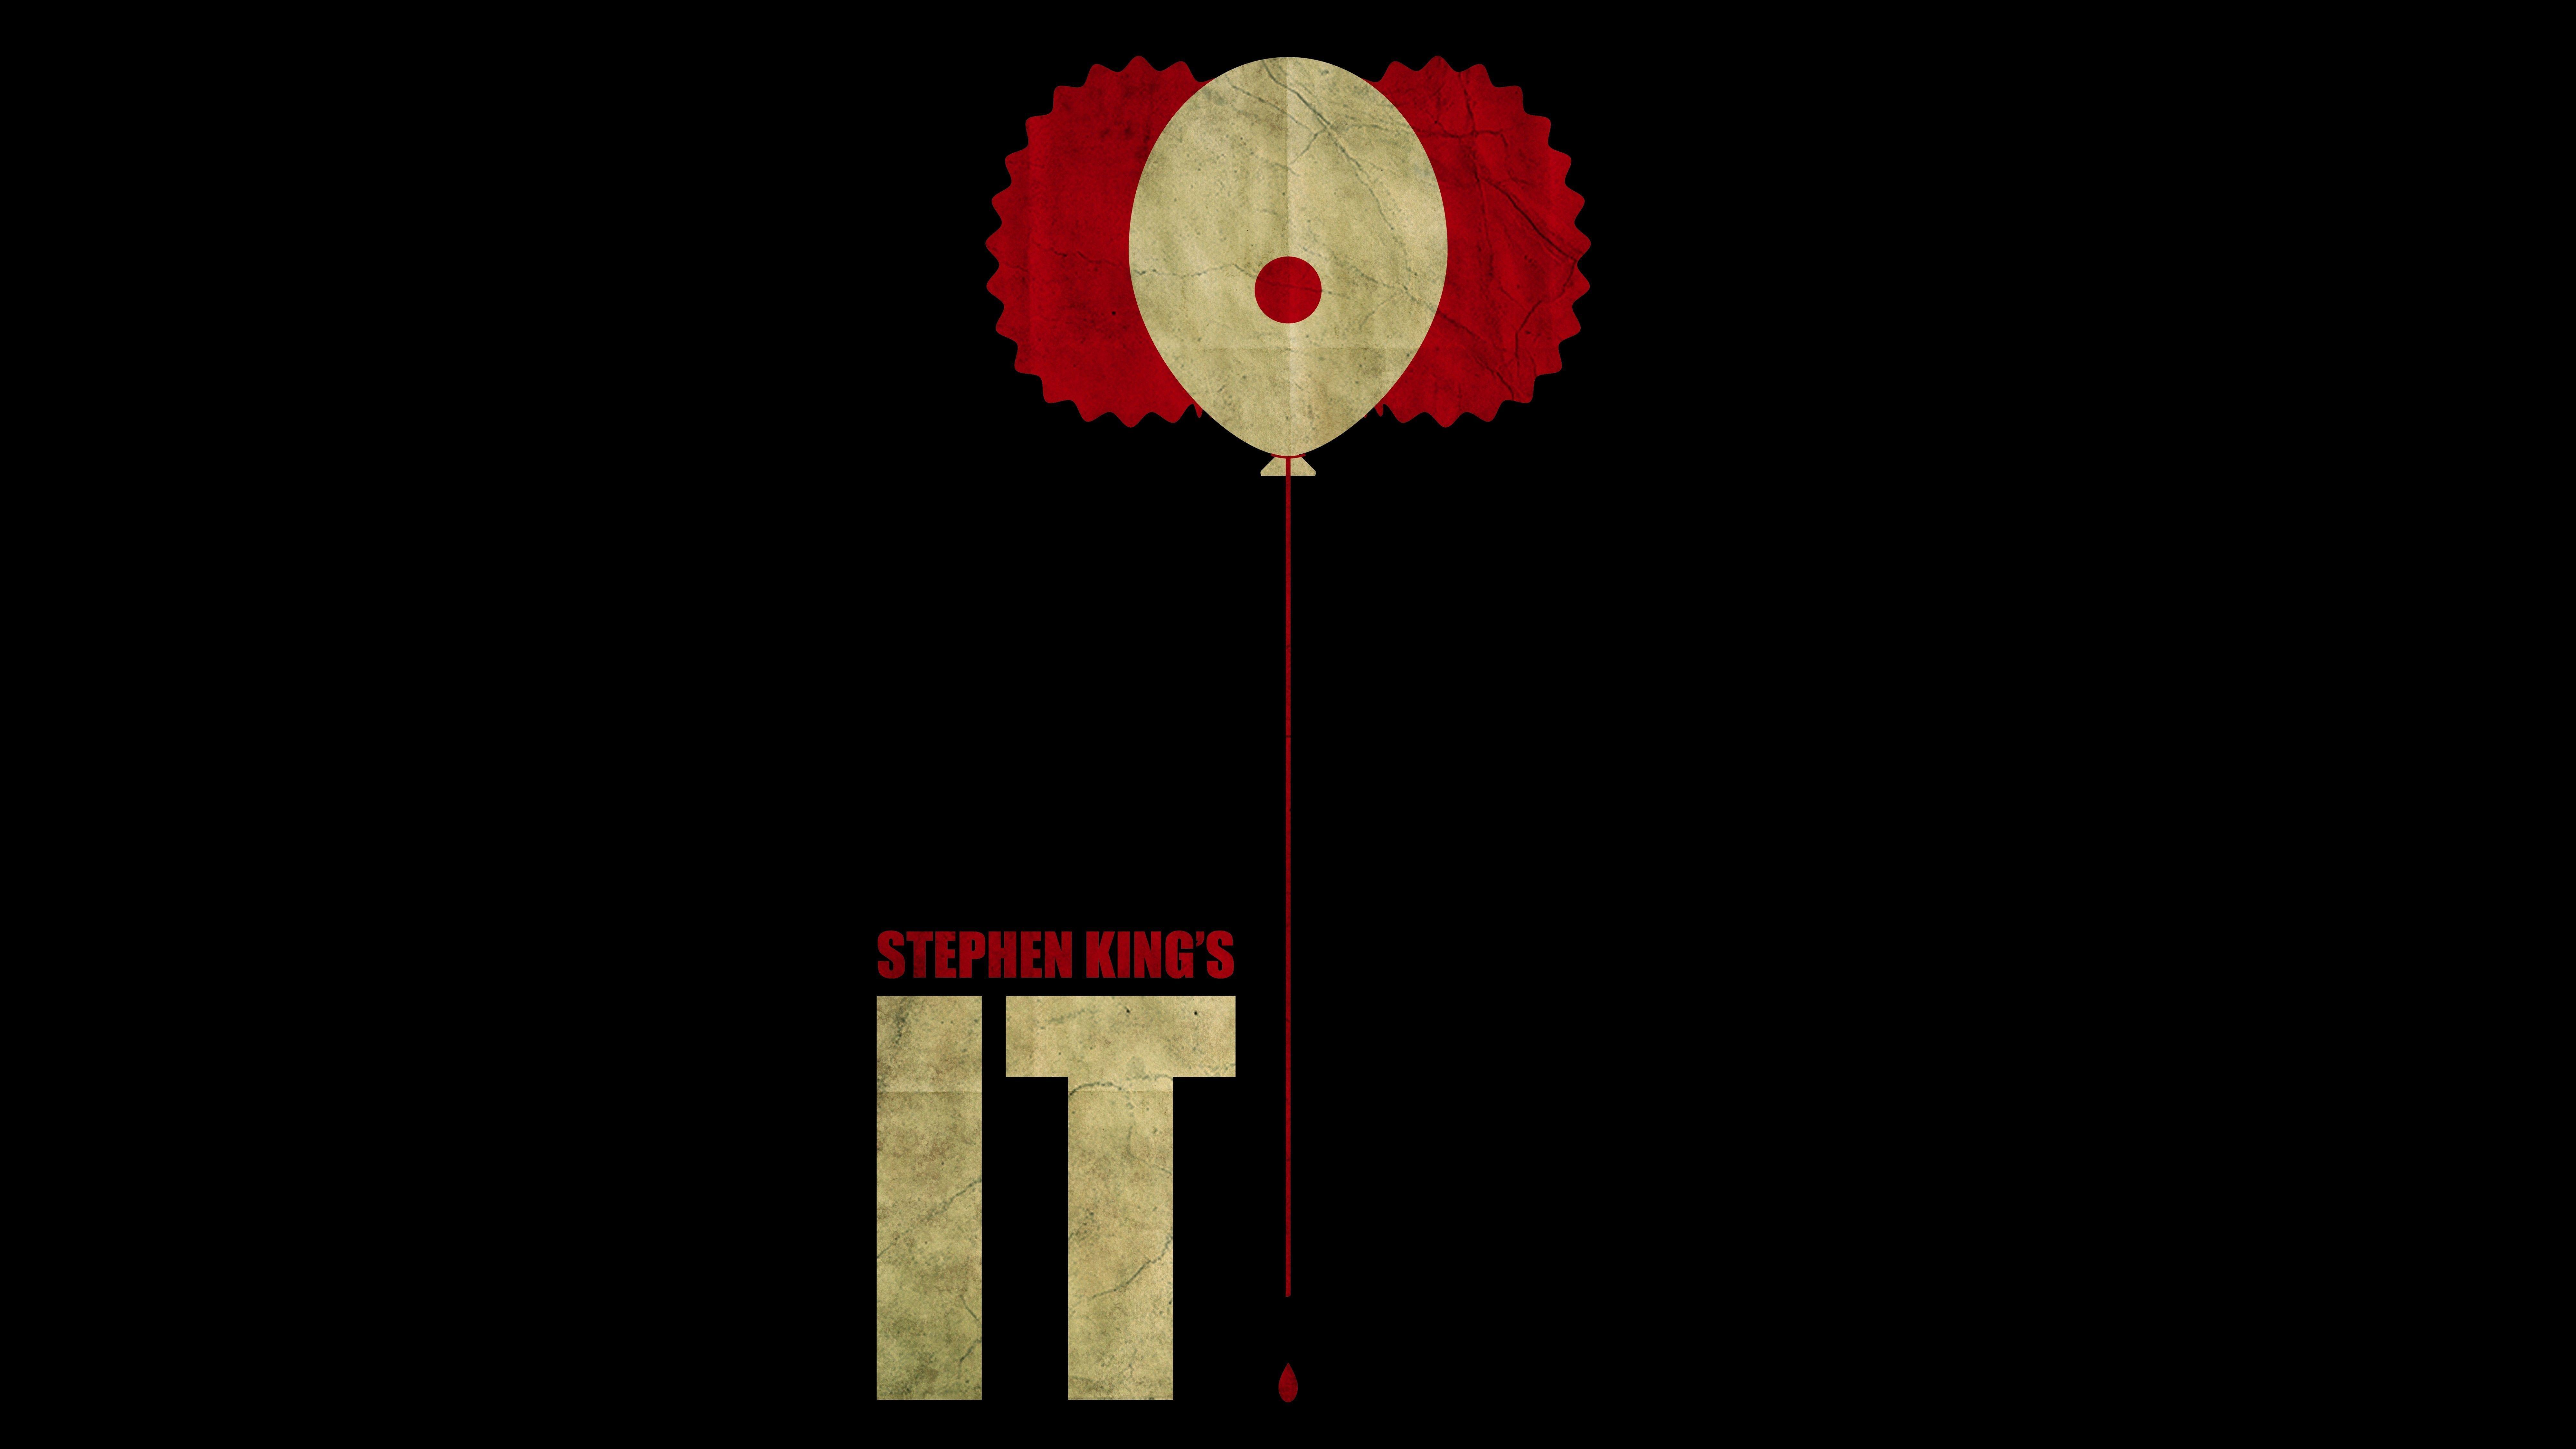 Stephen King Wallpaper, Image, Wallpaper of Stephen King in 100